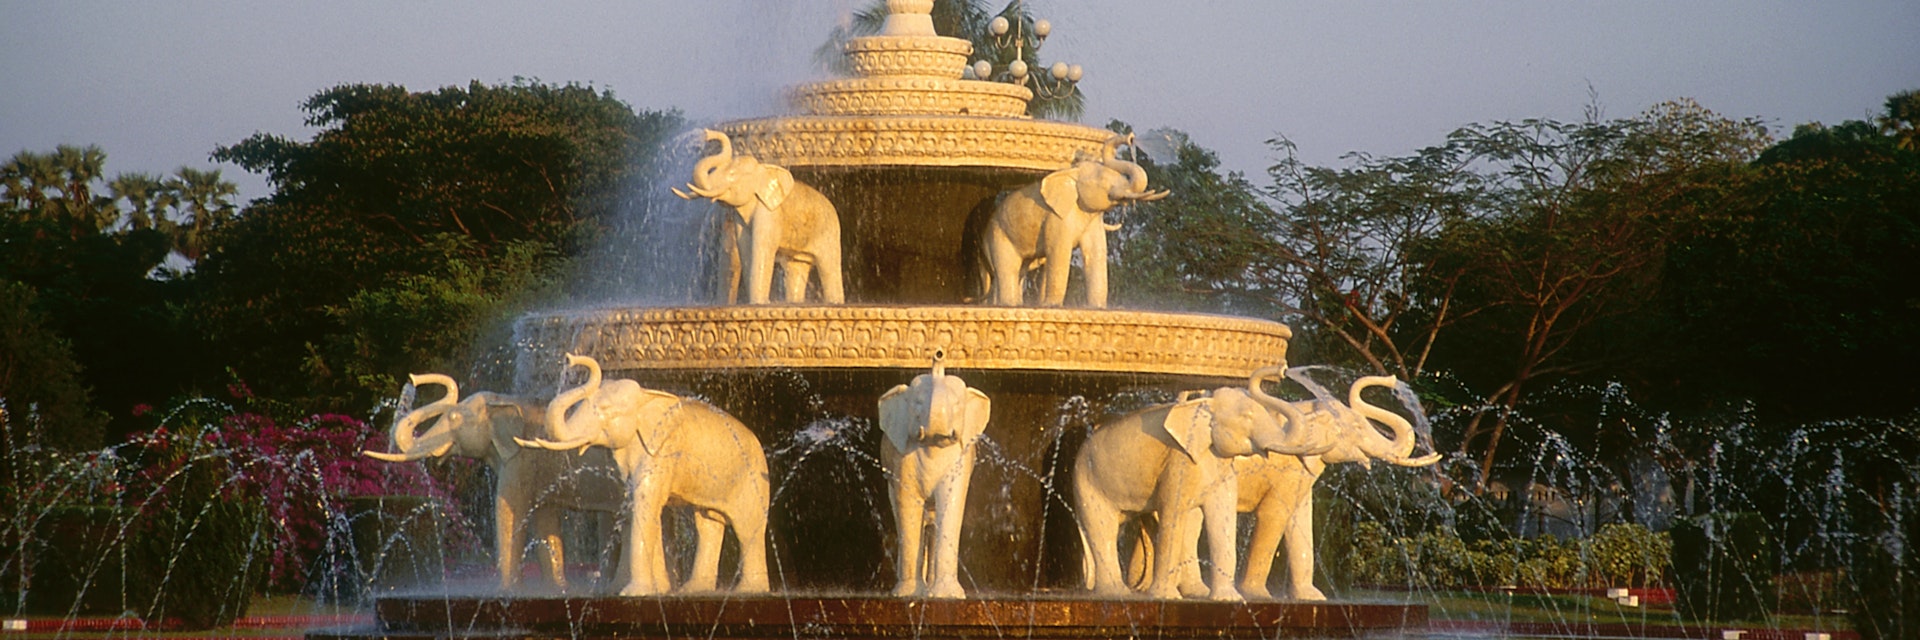 Elephant fountain, People's Park, Yangon, Myanmar